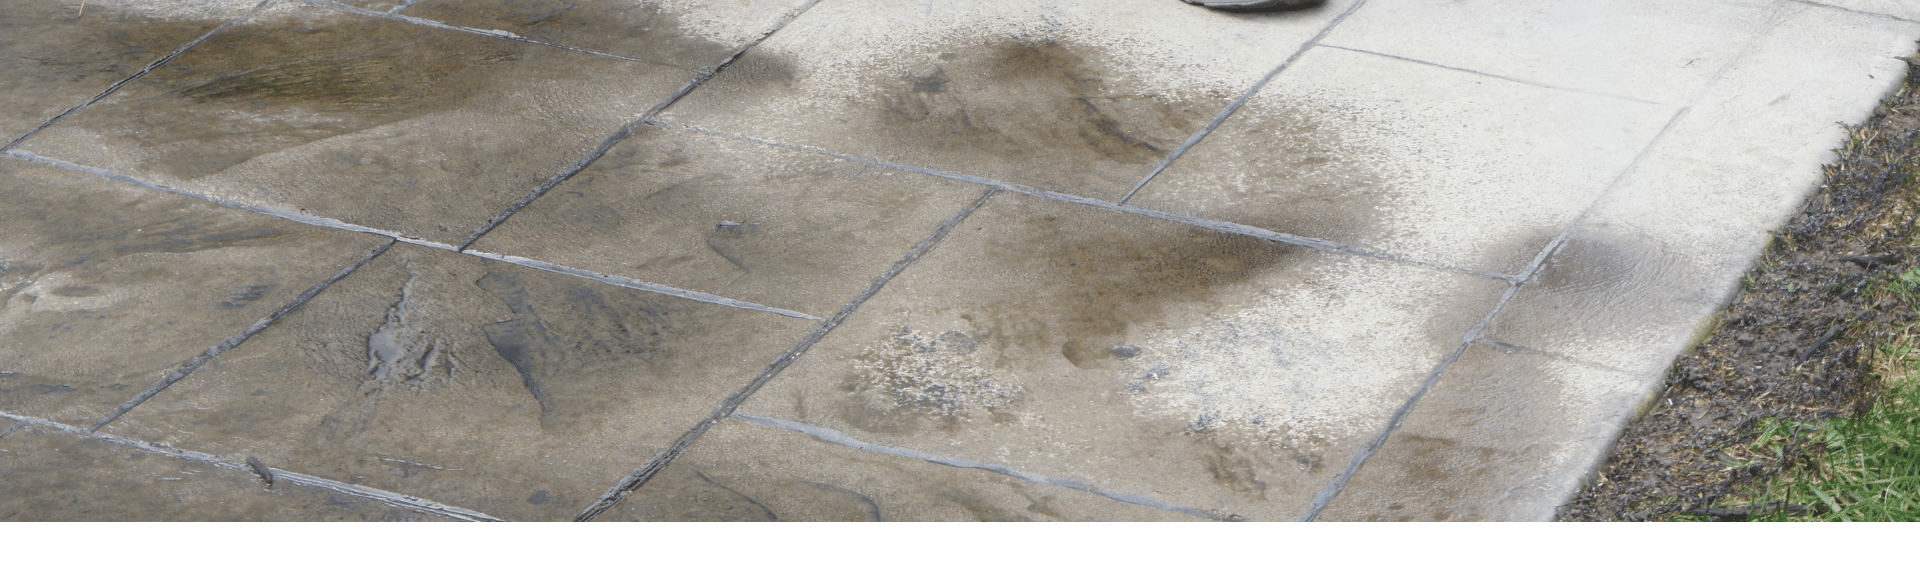 concrete sealing example